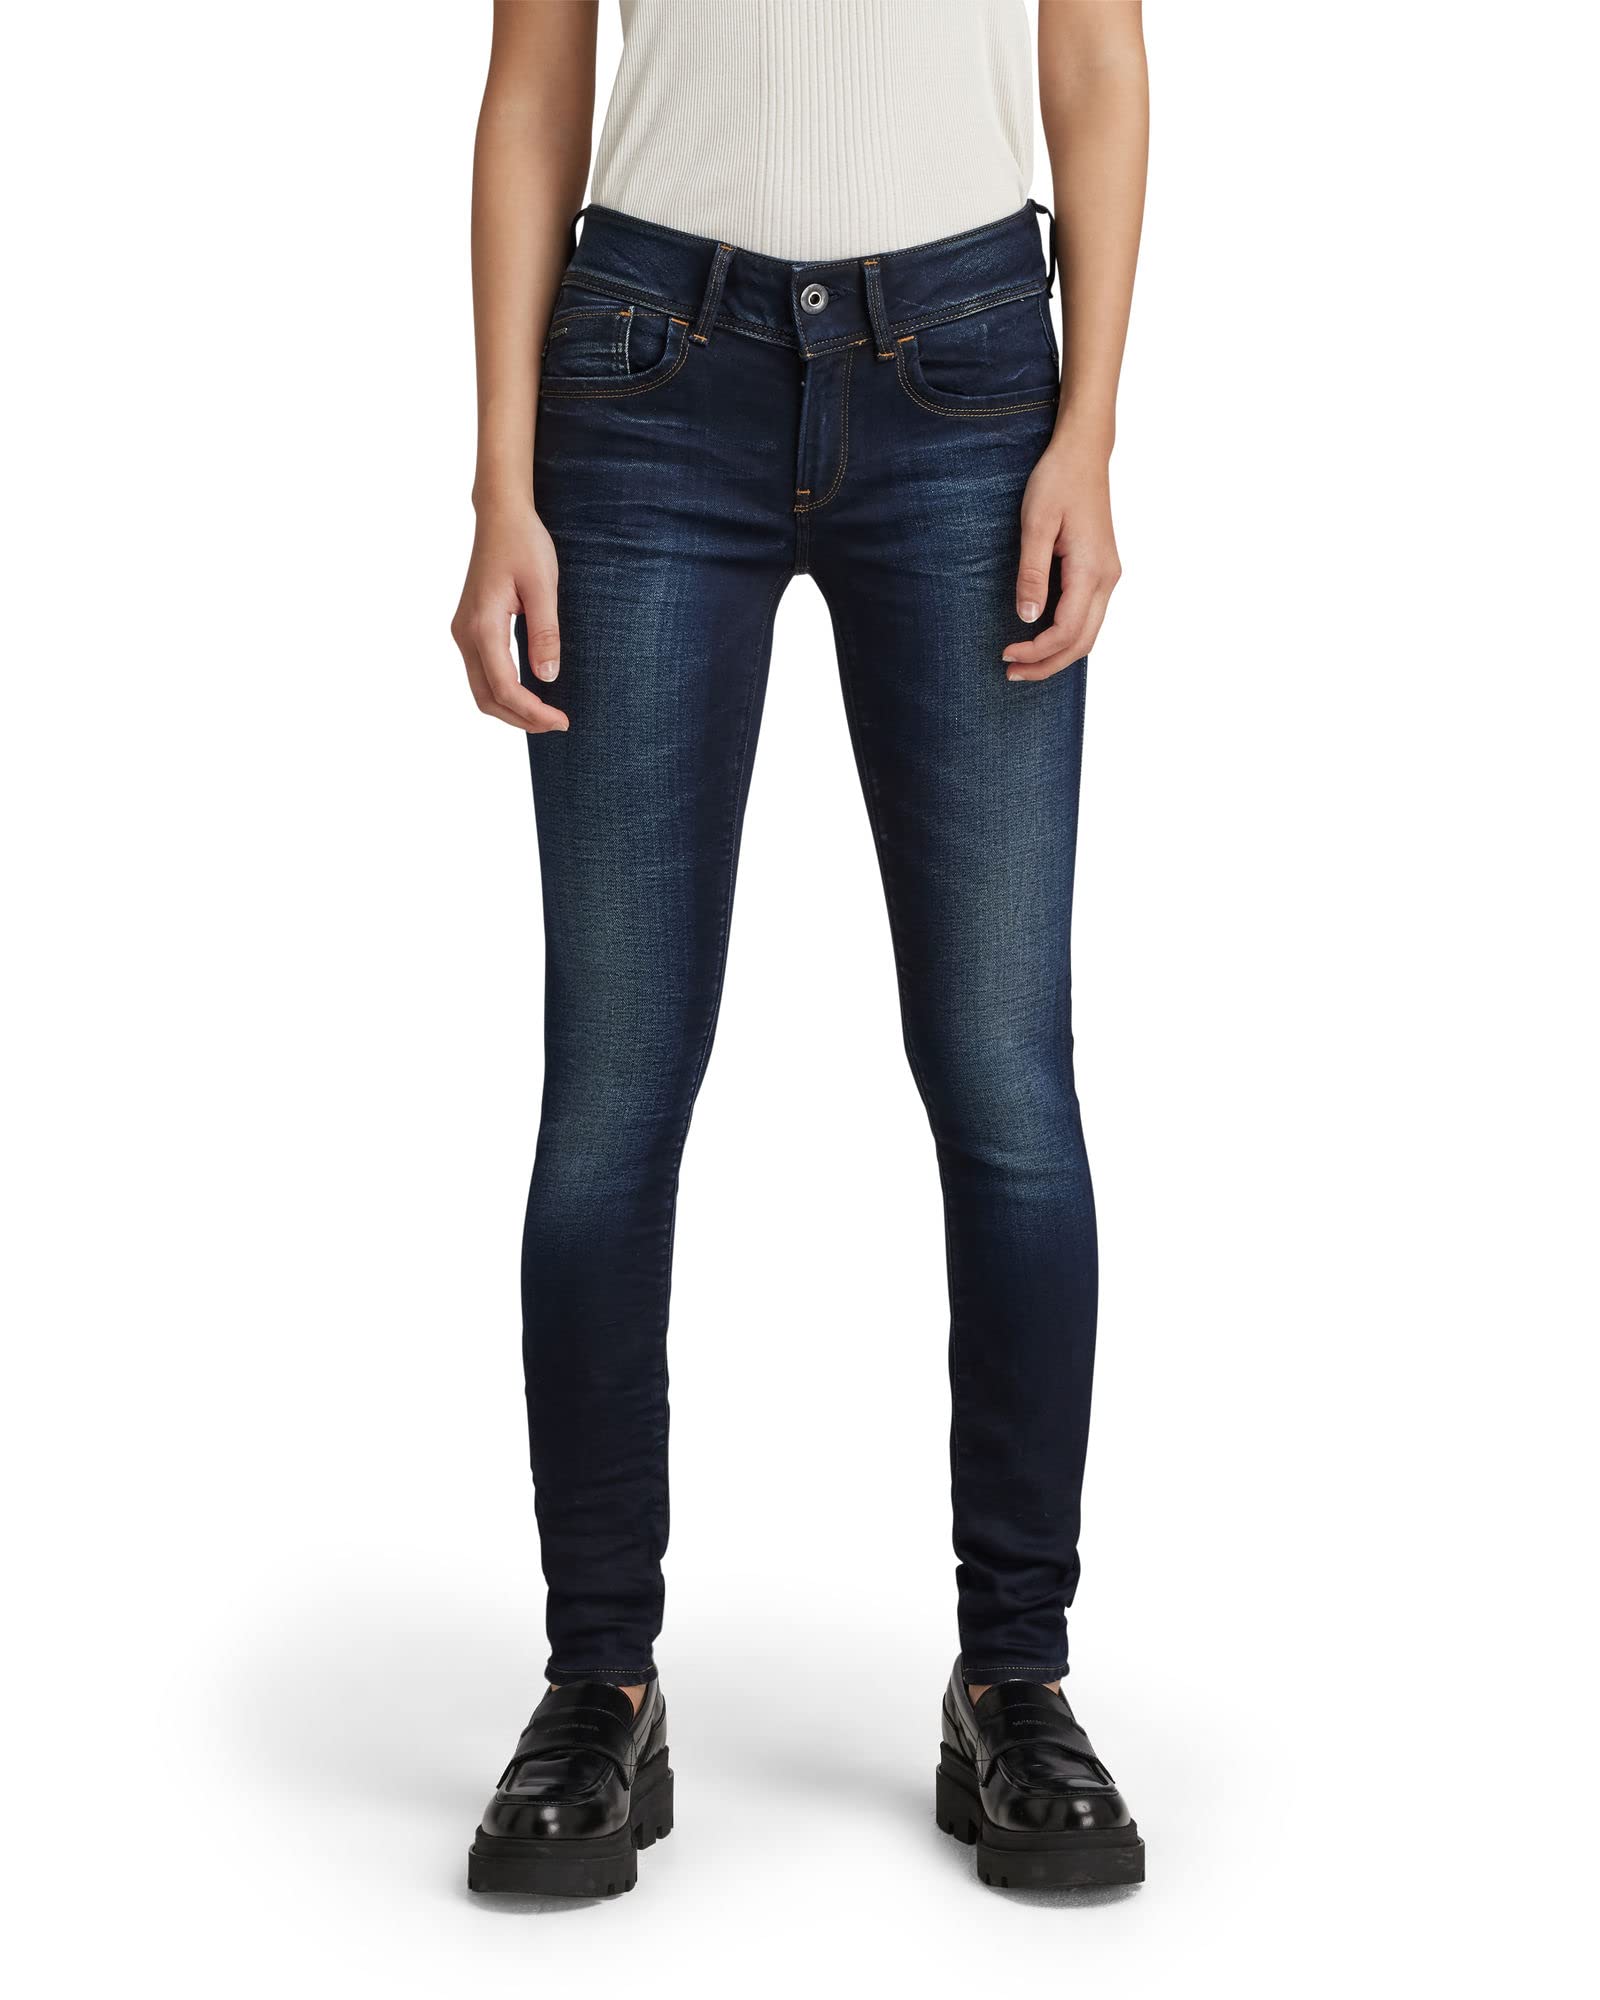 G-STAR RAW Damen Lynn Mid Waist Skinny Jeans, Blau (medium aged 60885-6131-071), 33W / 30L